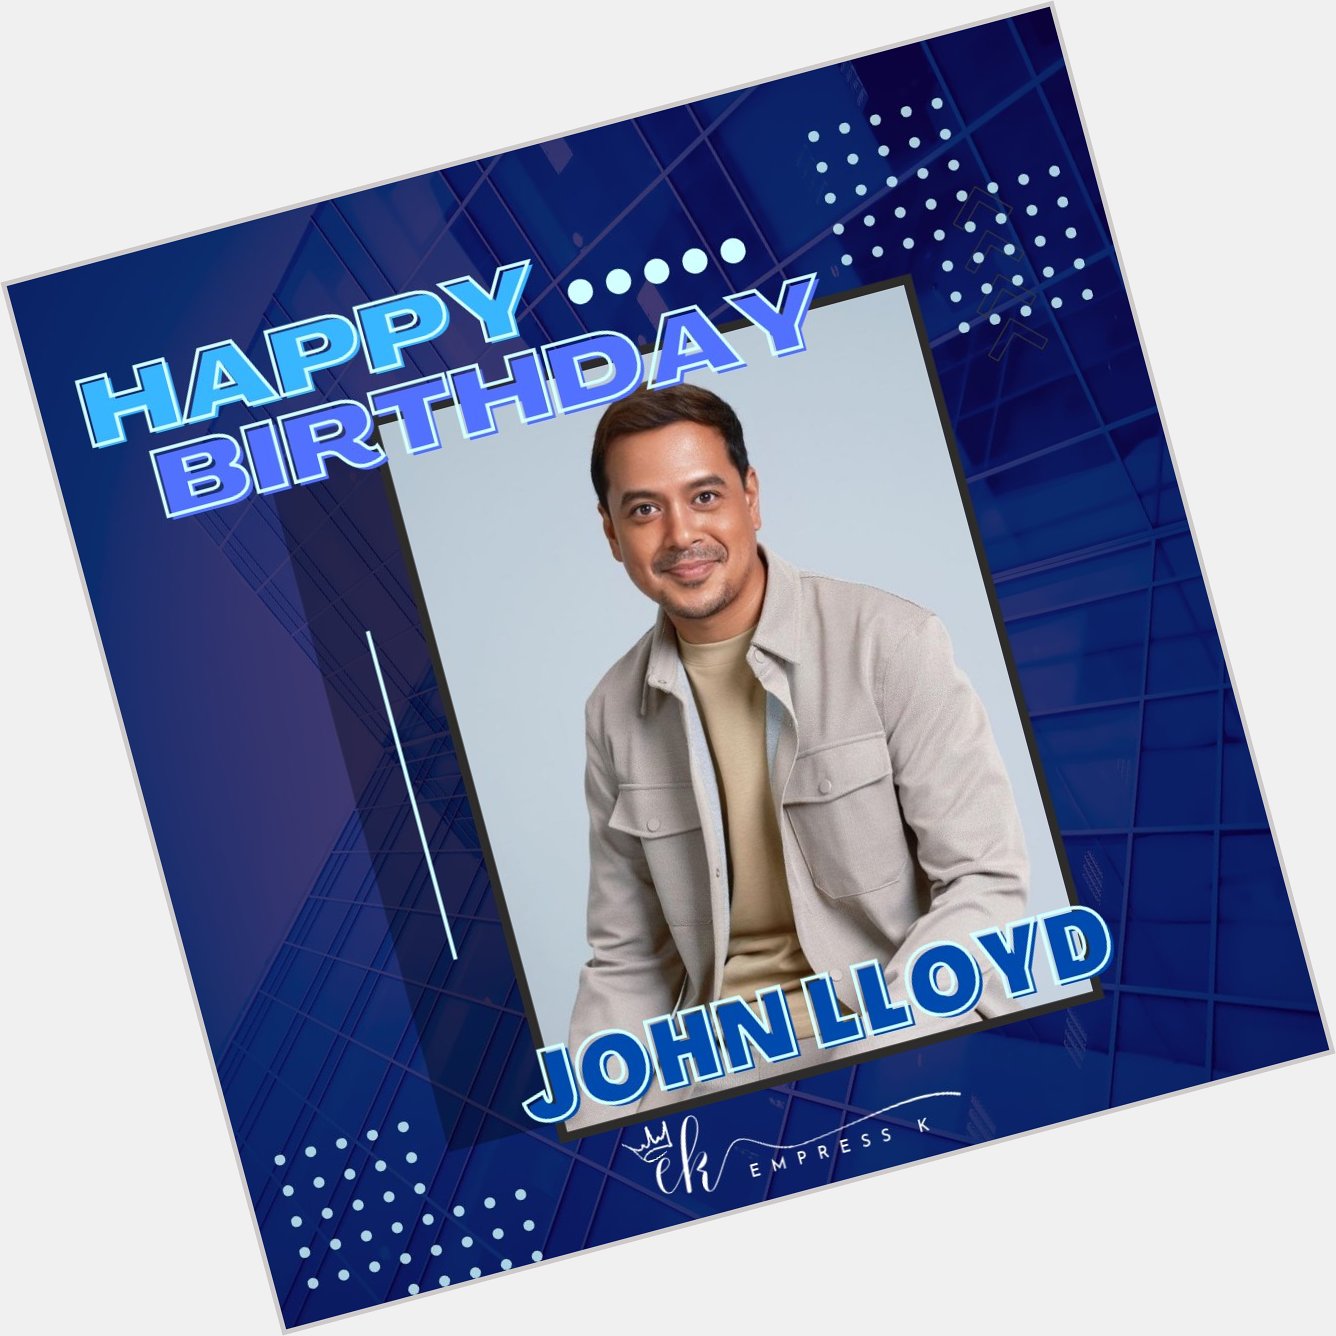 Happy birthday, John Lloyd Cruz! I hope you have a wonderful day and year to come.  